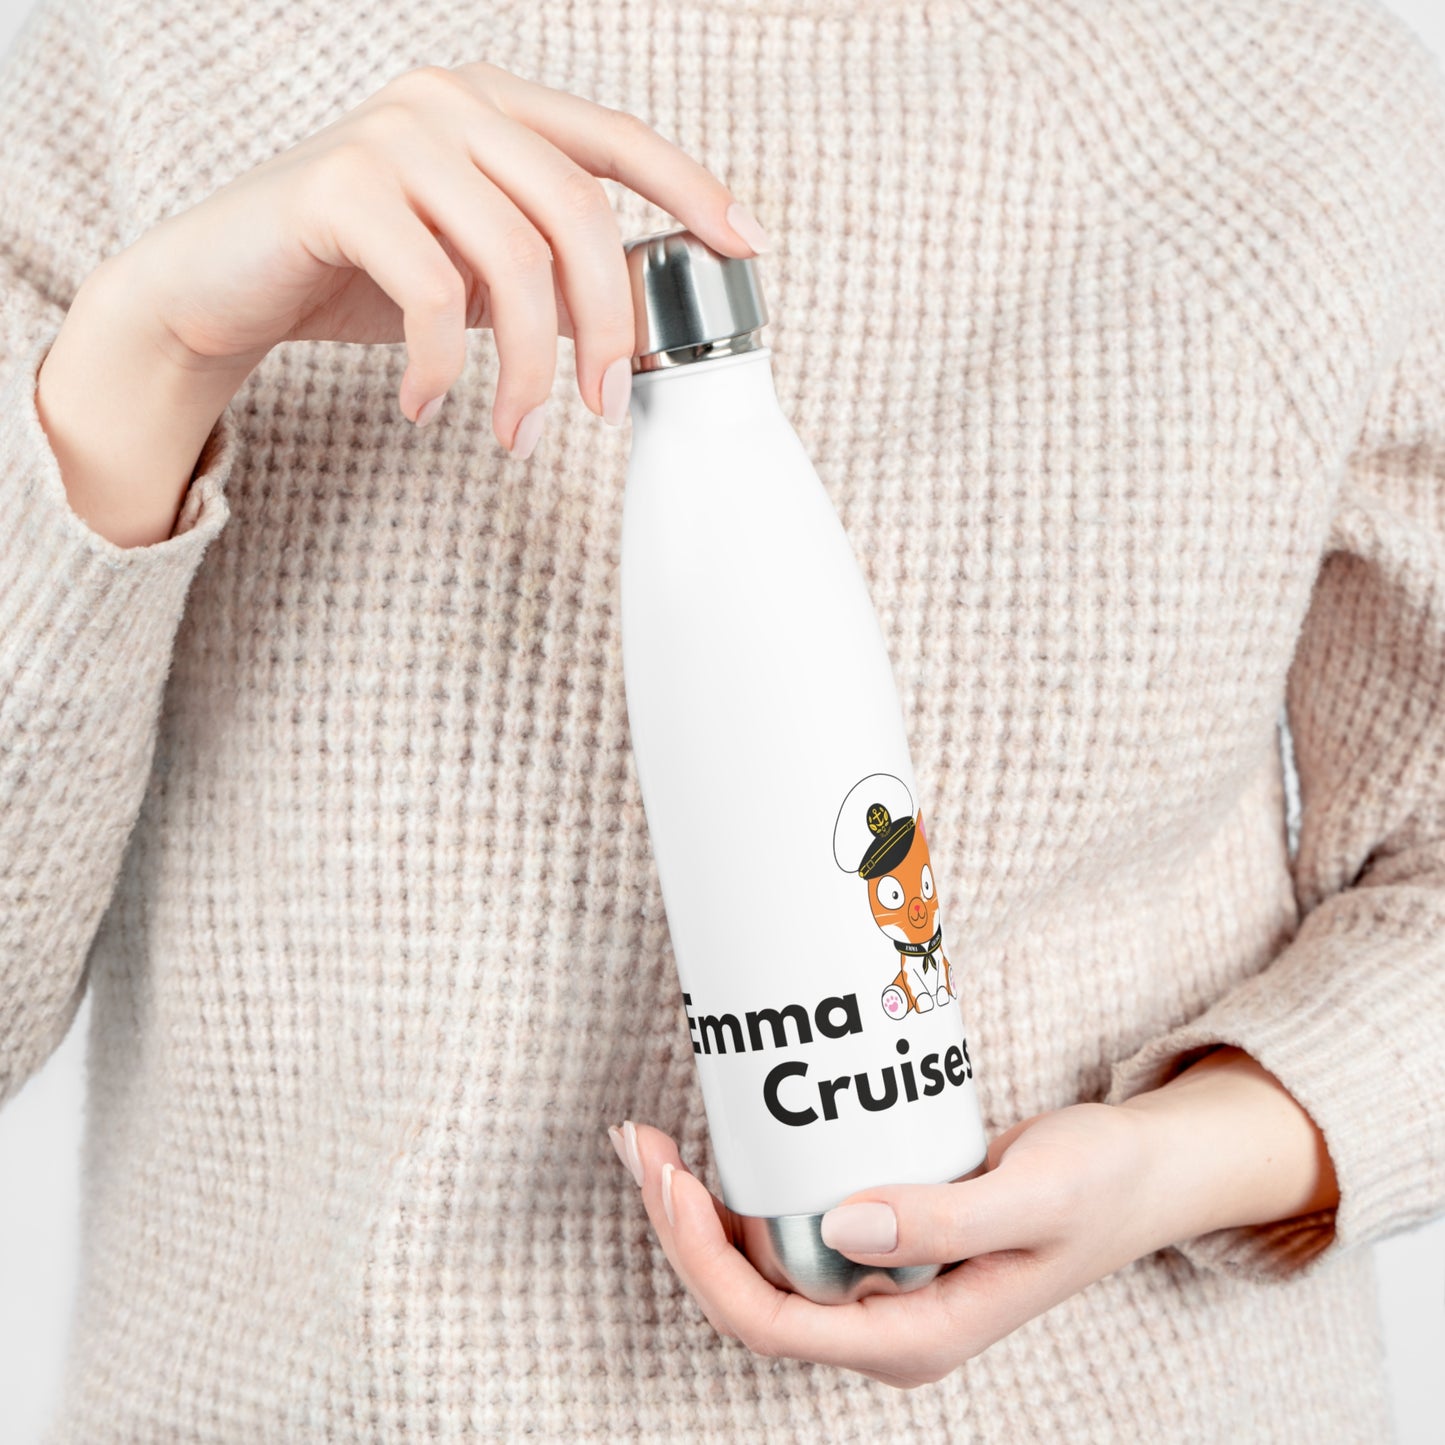 Emma Cruises - Flasche